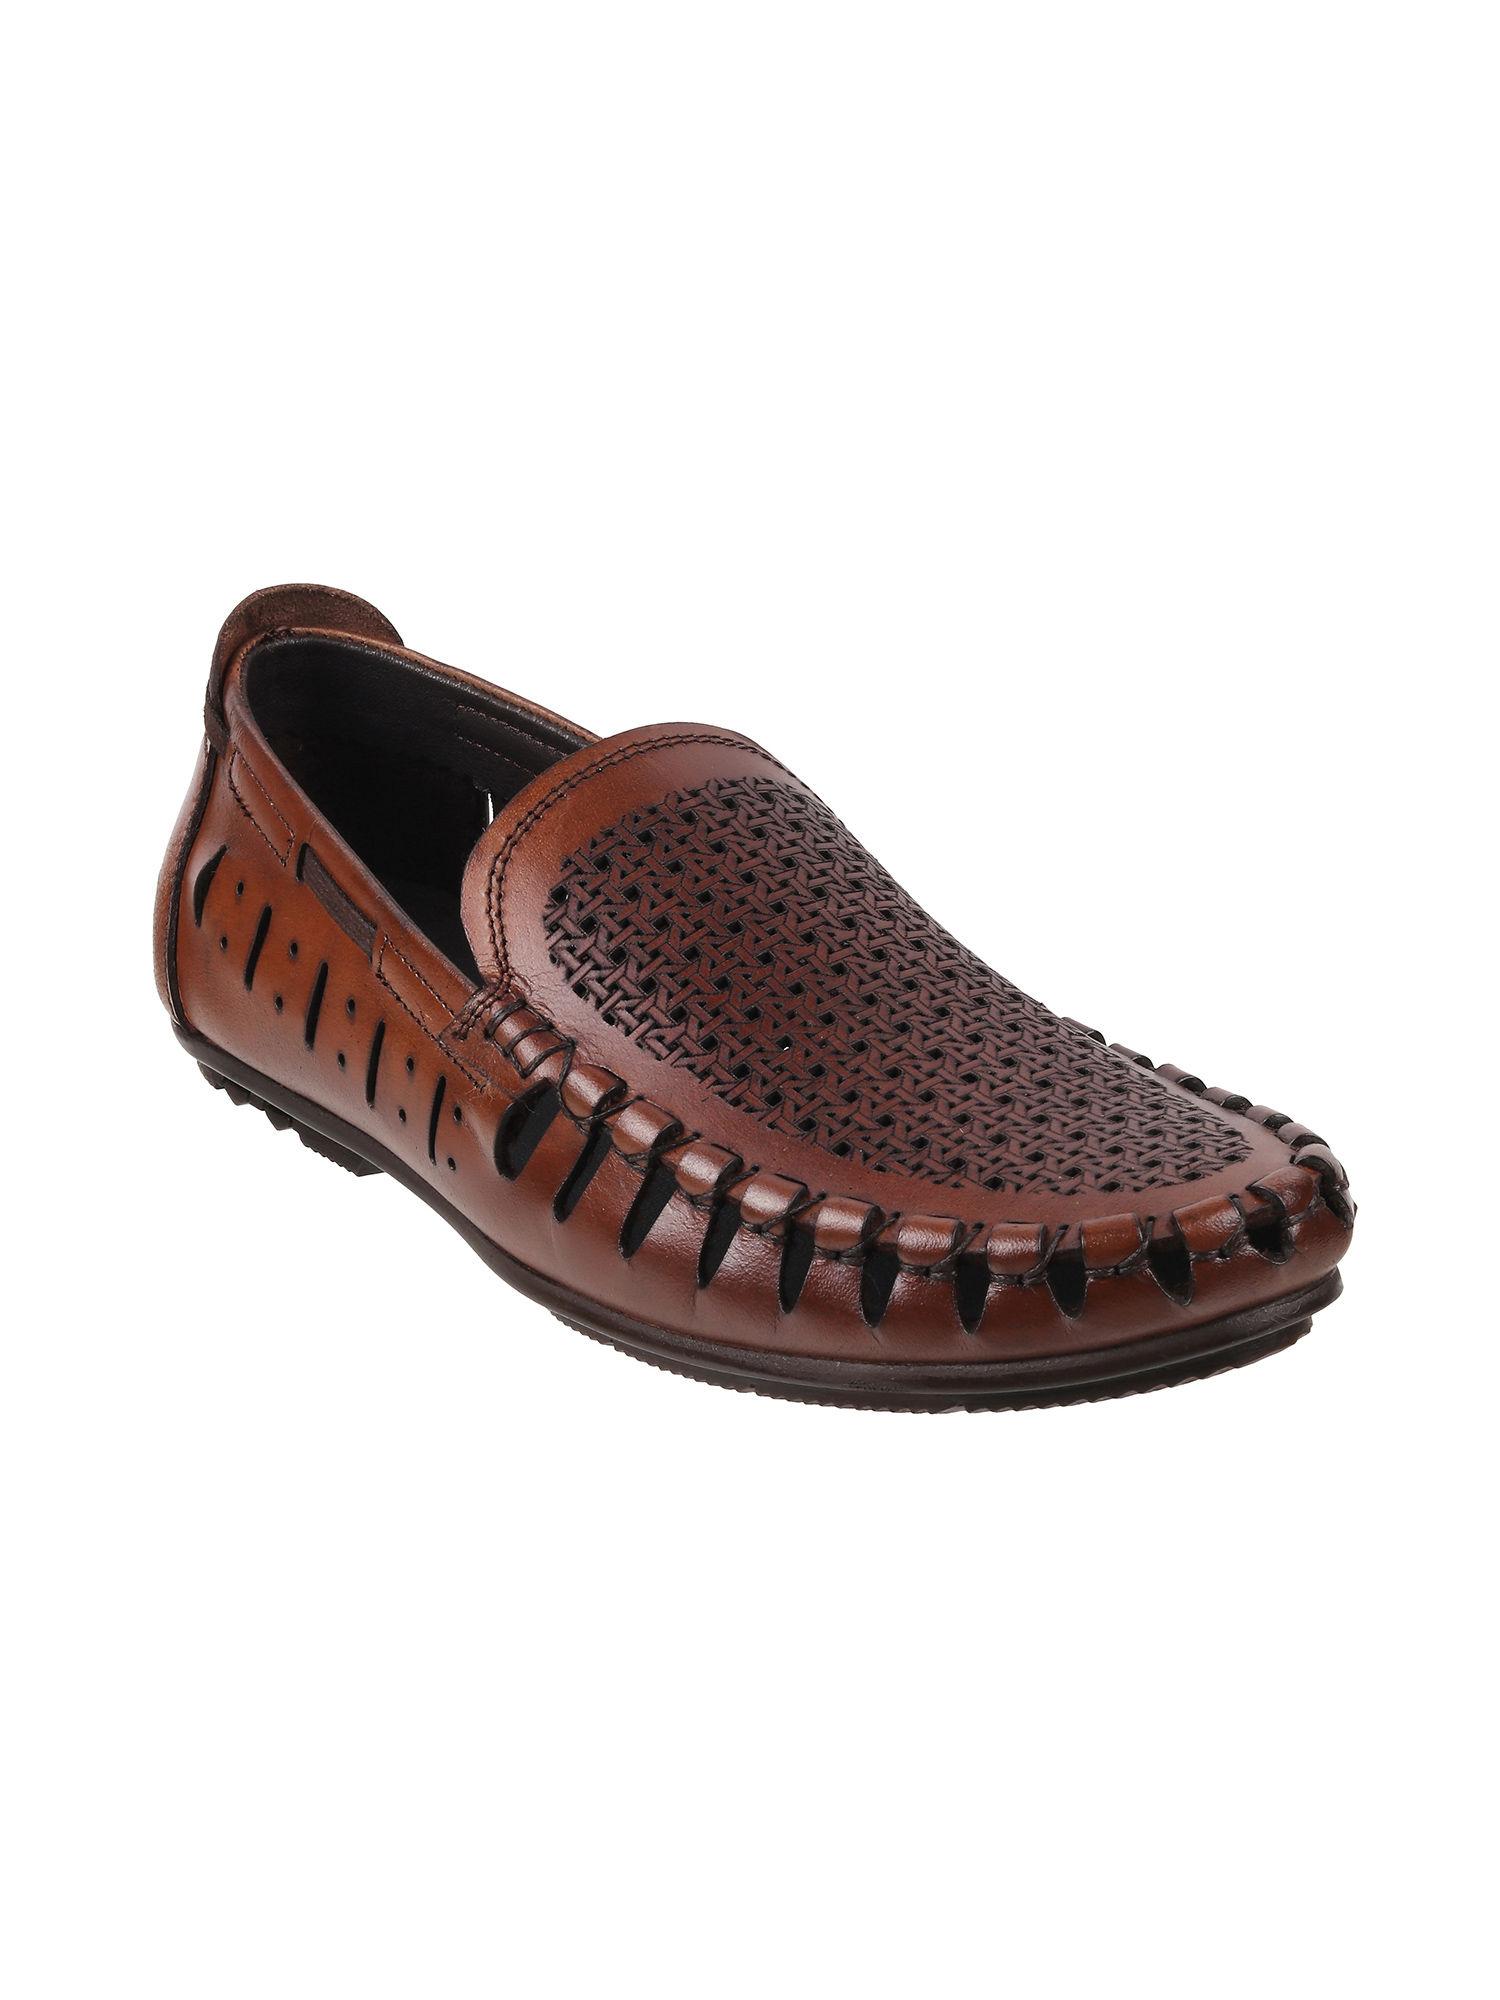 men-leather-tan-closed-toe-sandals